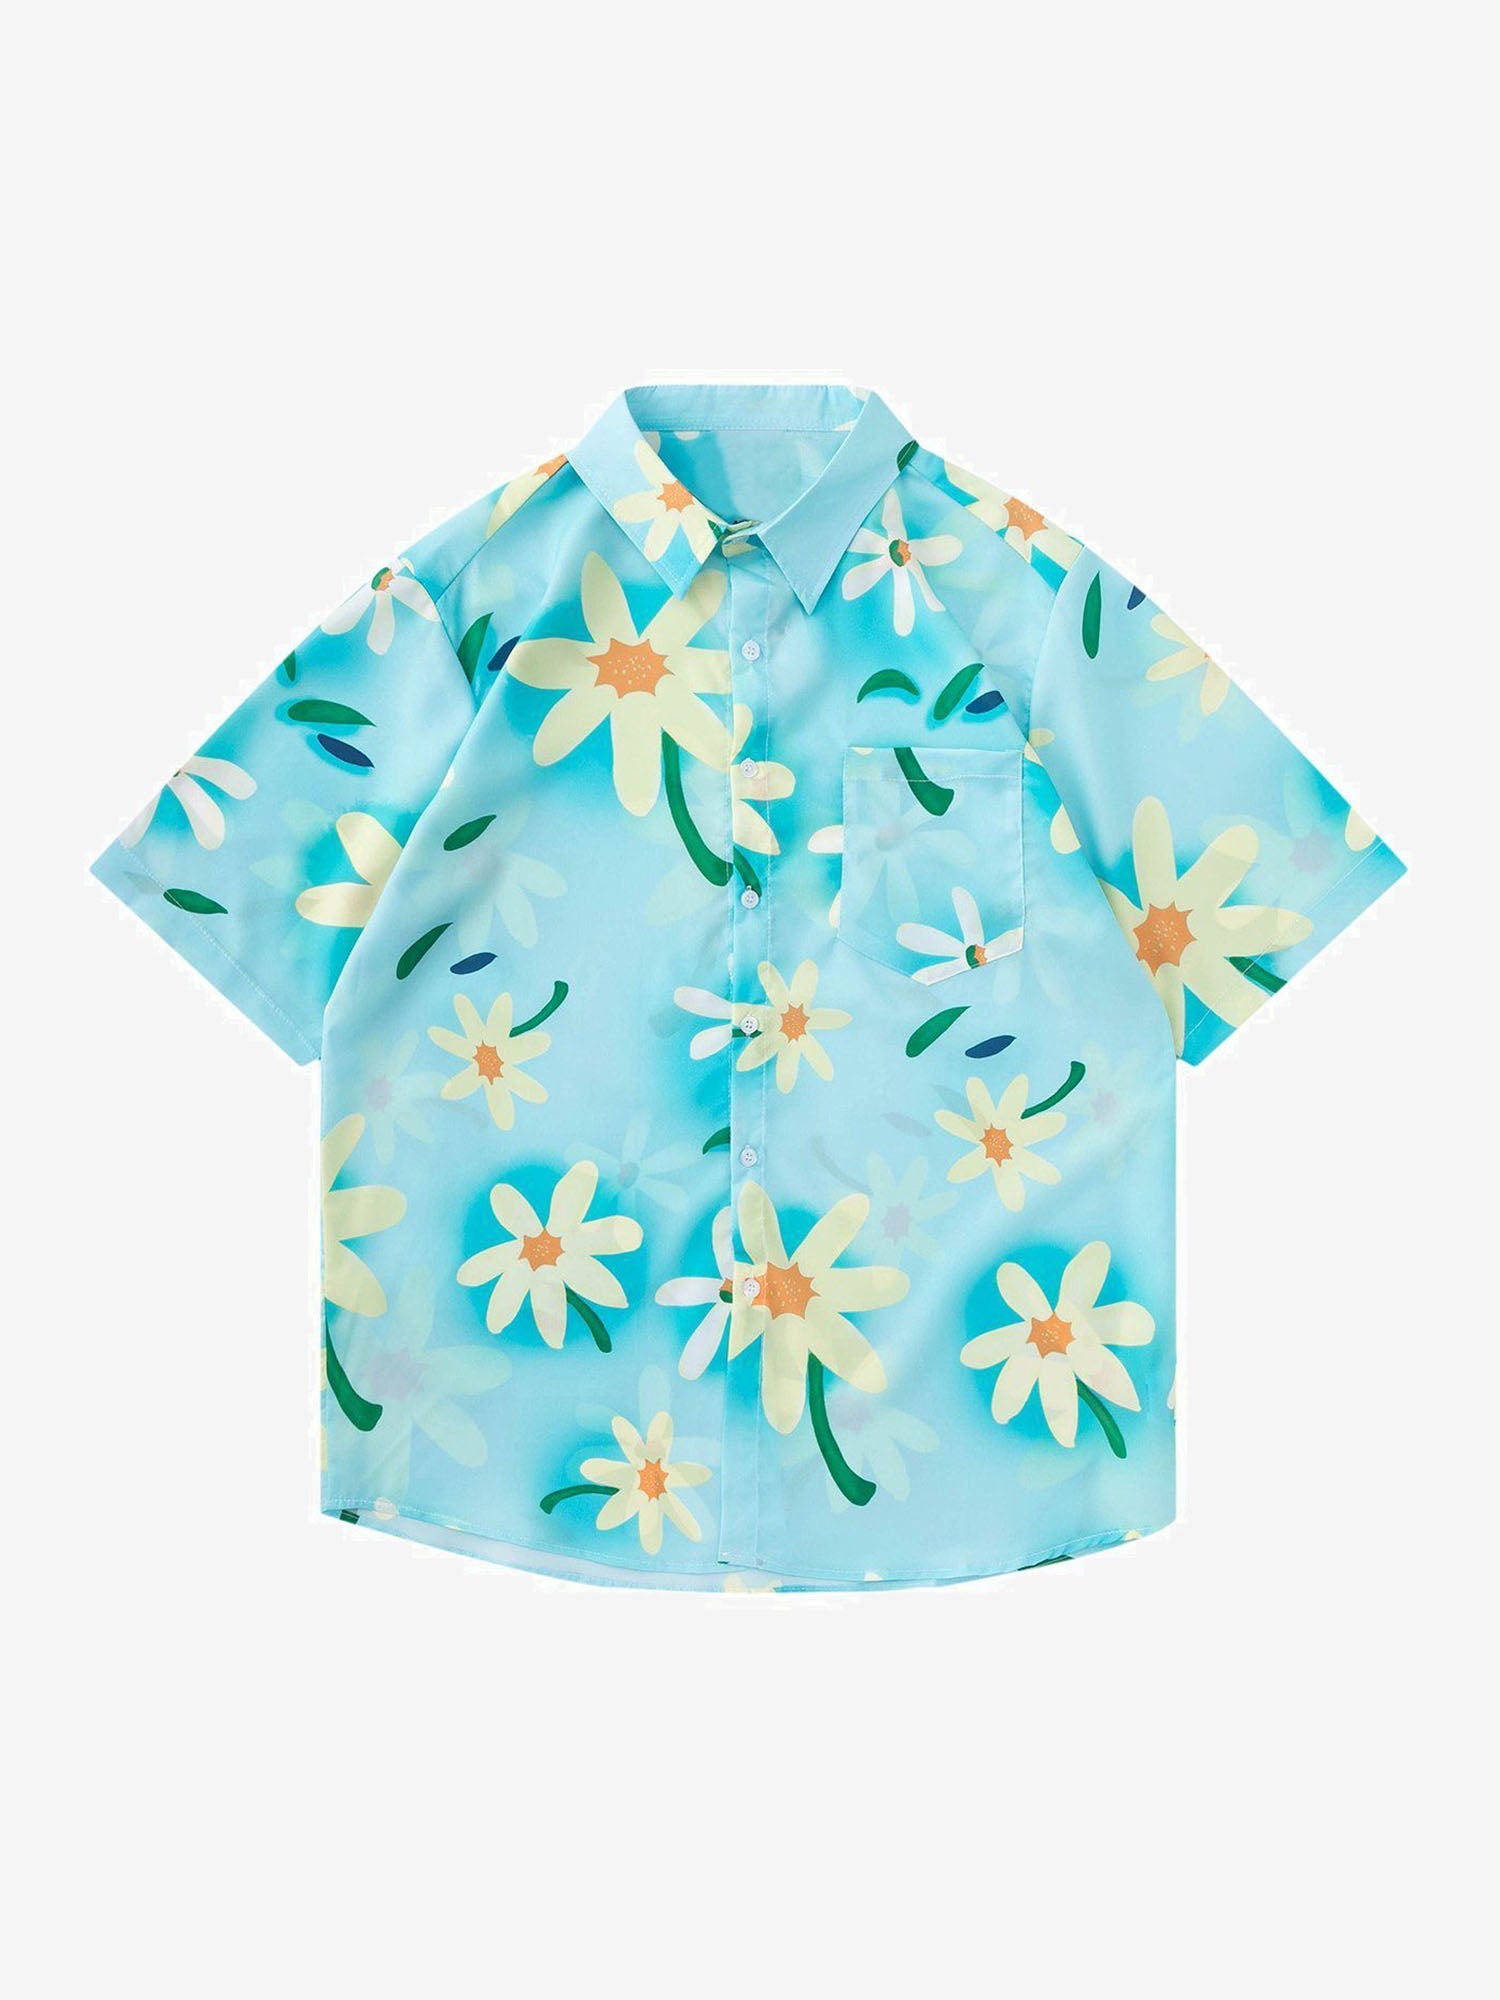 JUSTNOTAG Flower Full Print Holiday Wind Short Sleeve Shirt